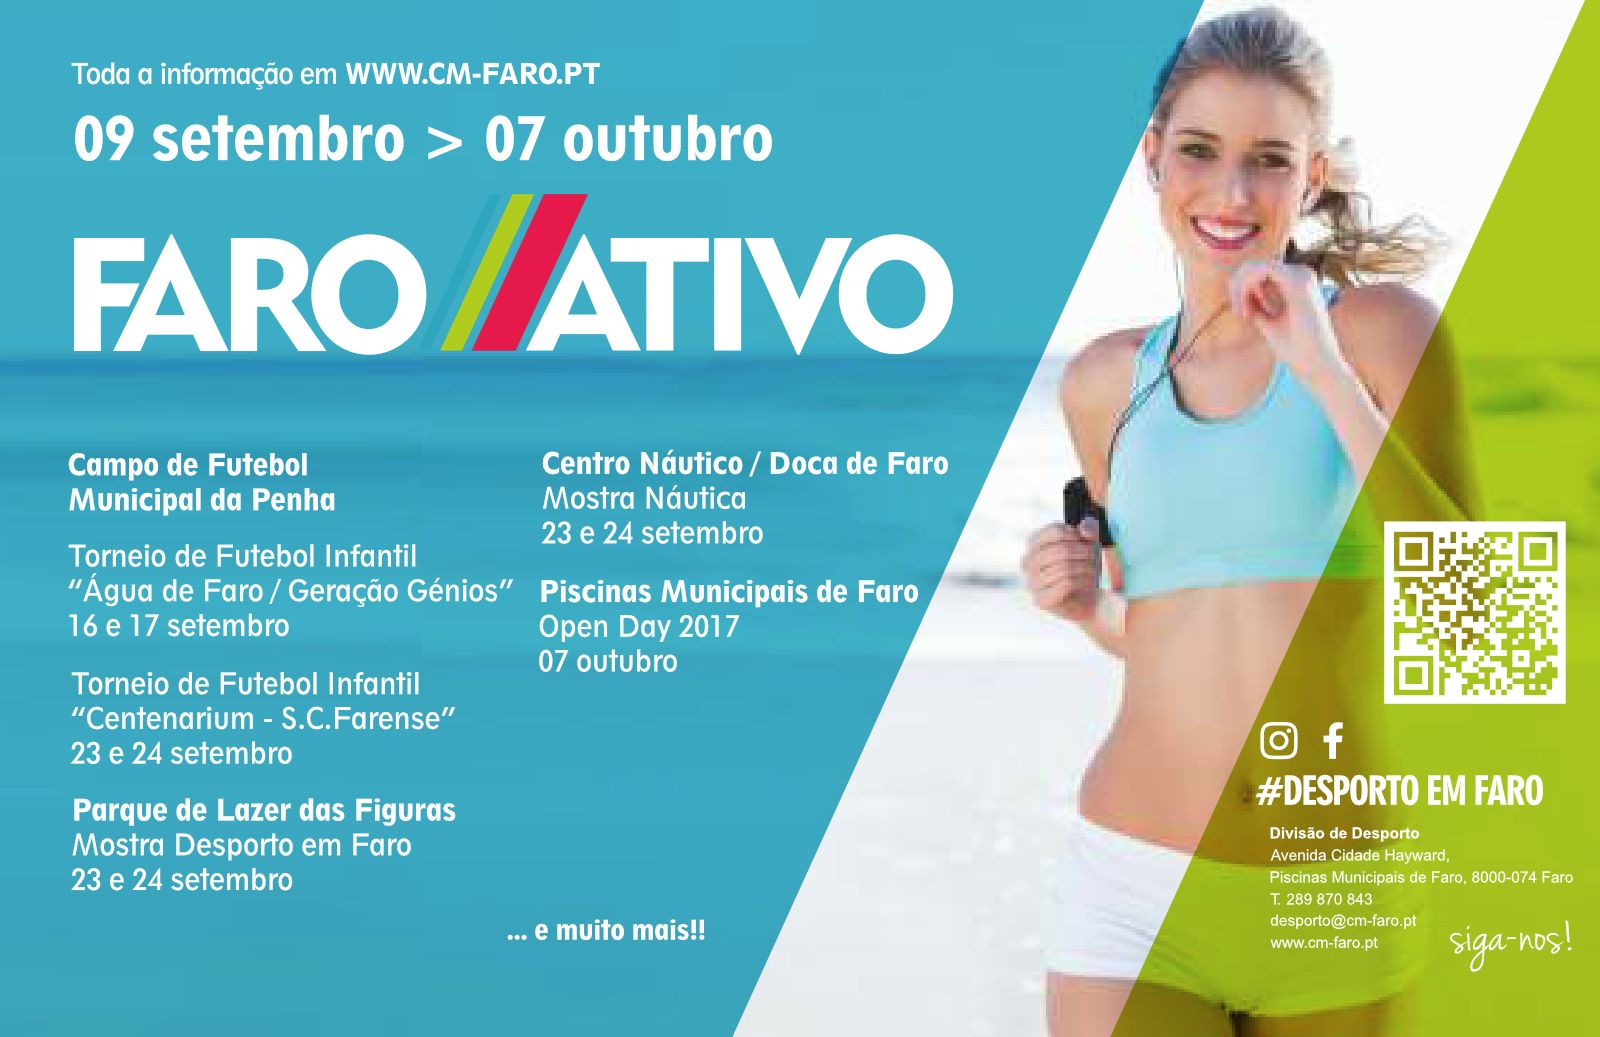 Faro Ativo 2017